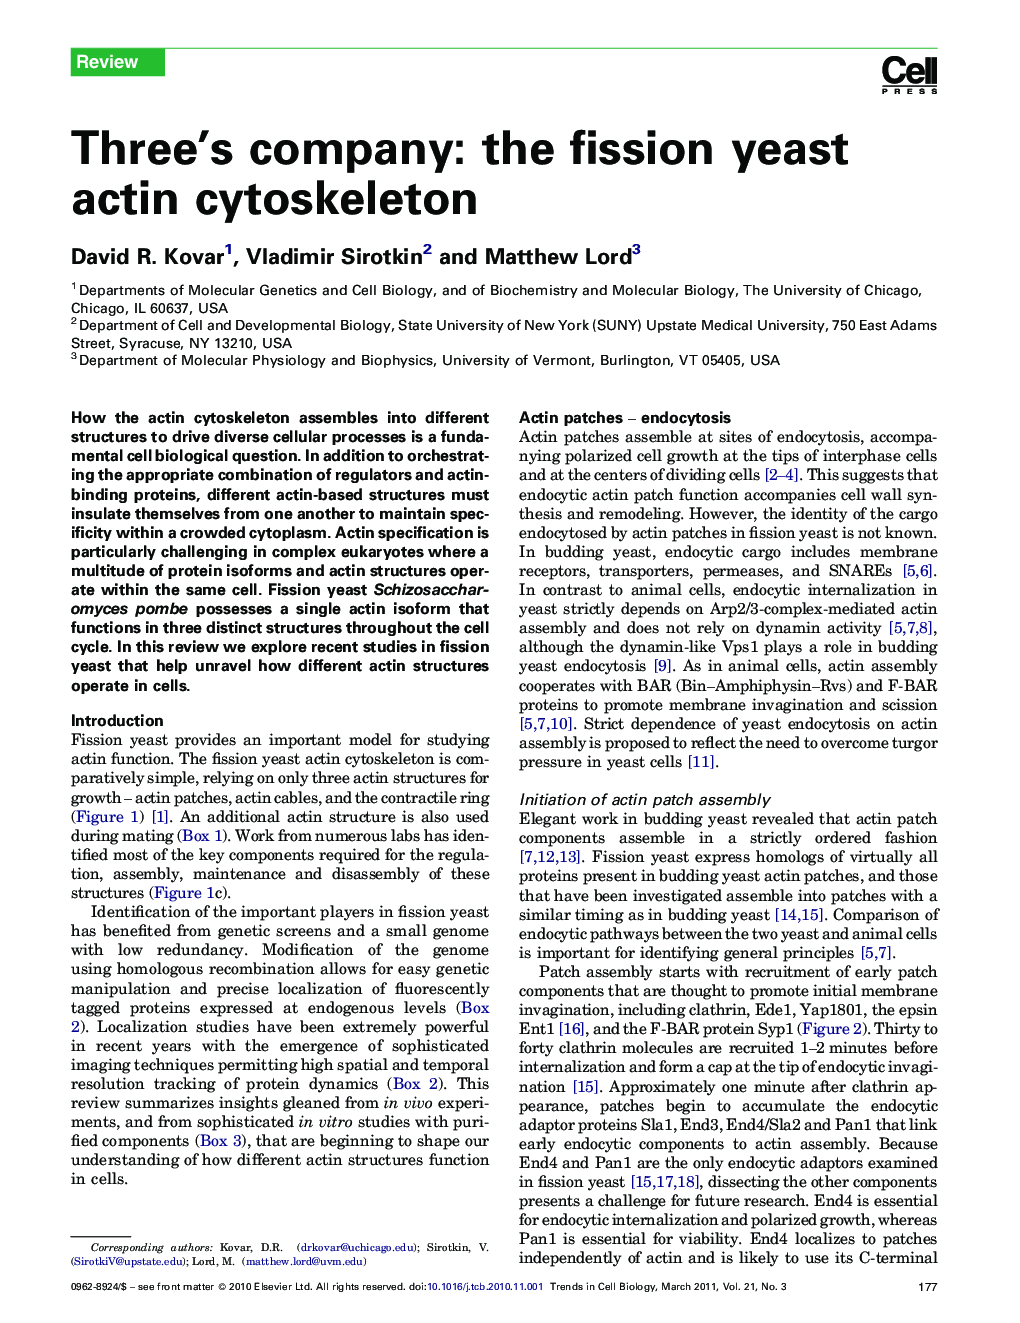 Three's company: the fission yeast actin cytoskeleton